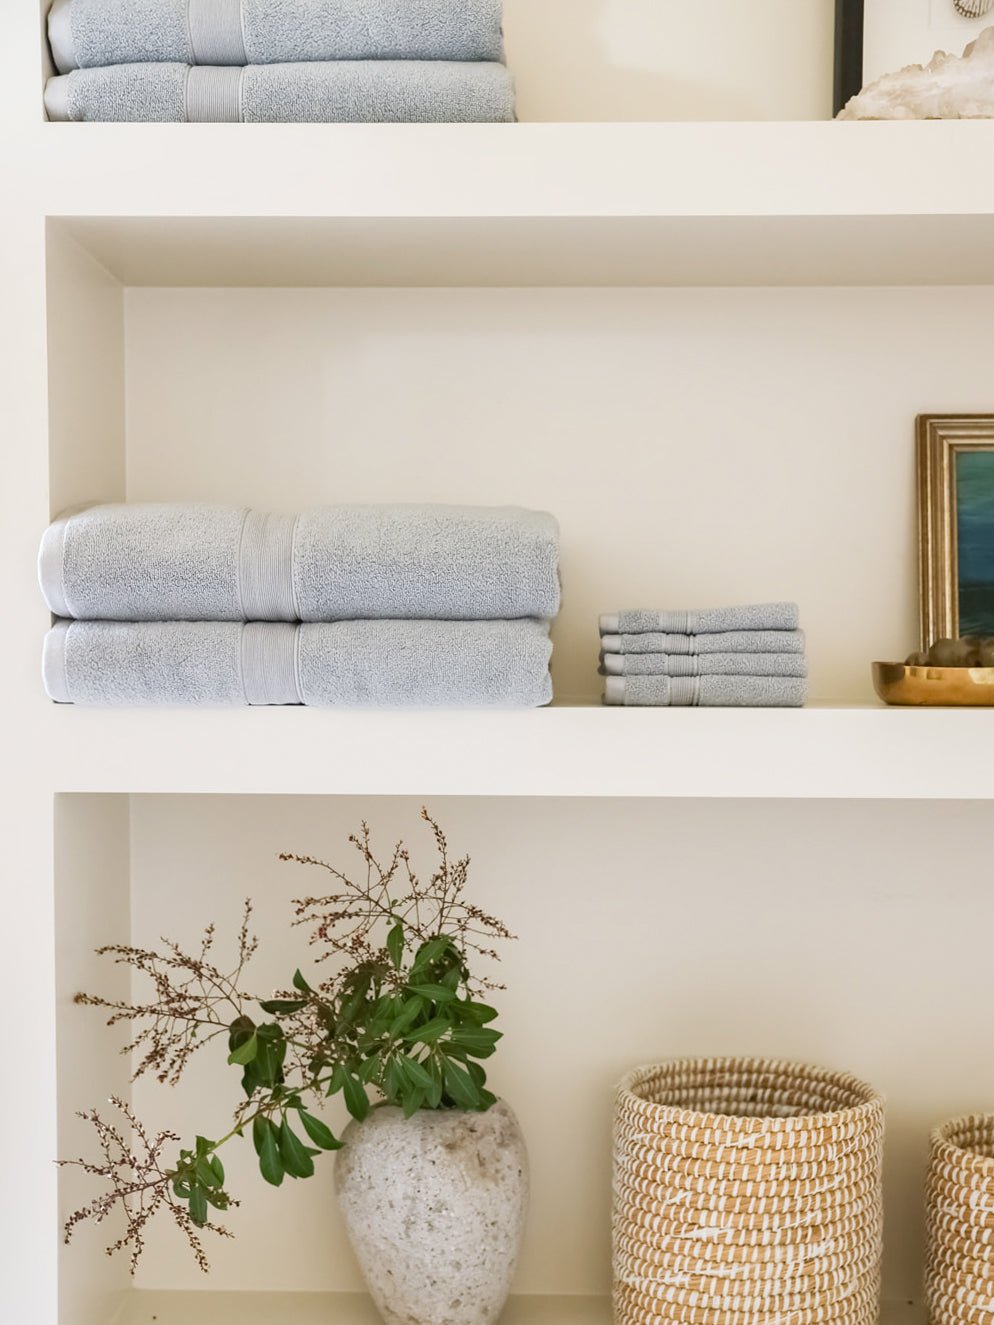 Harbor mist towels and washcloths folded on shelf 